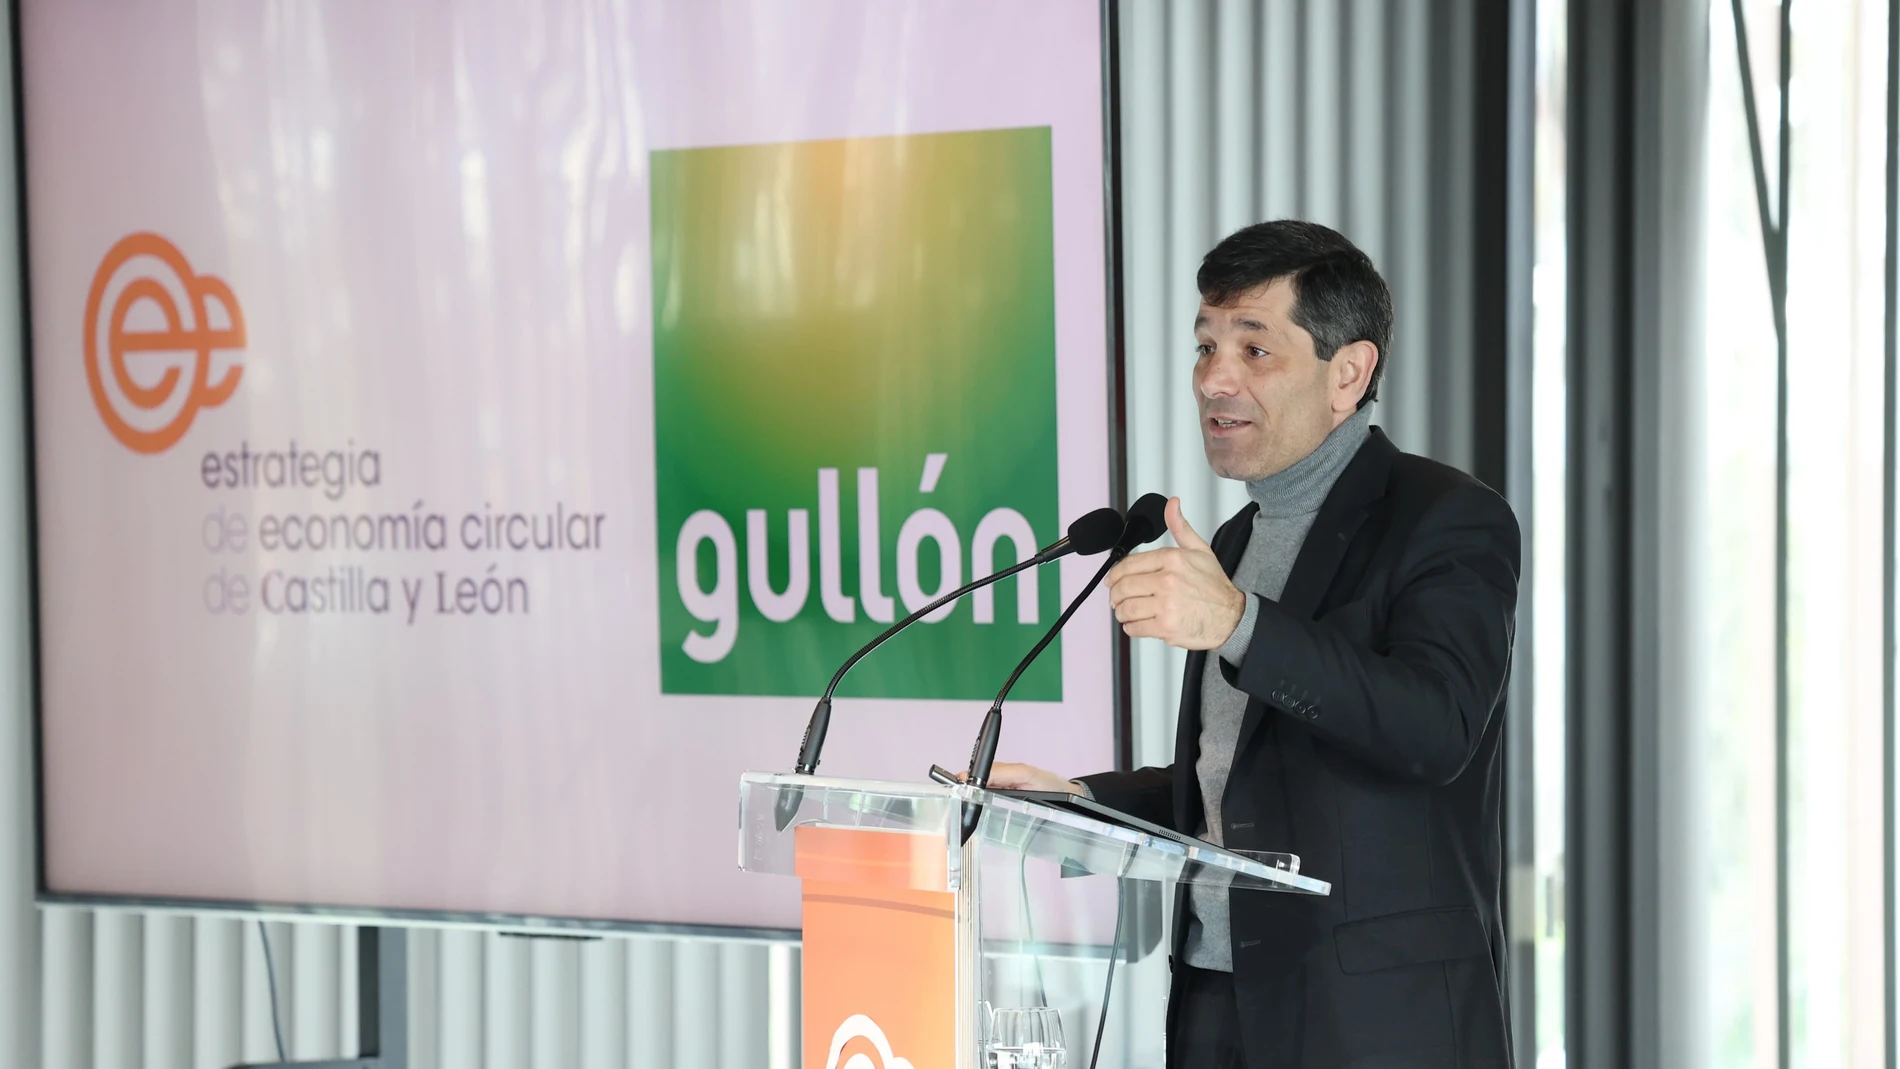 El director corporativo de Gullón, Paco Hevia